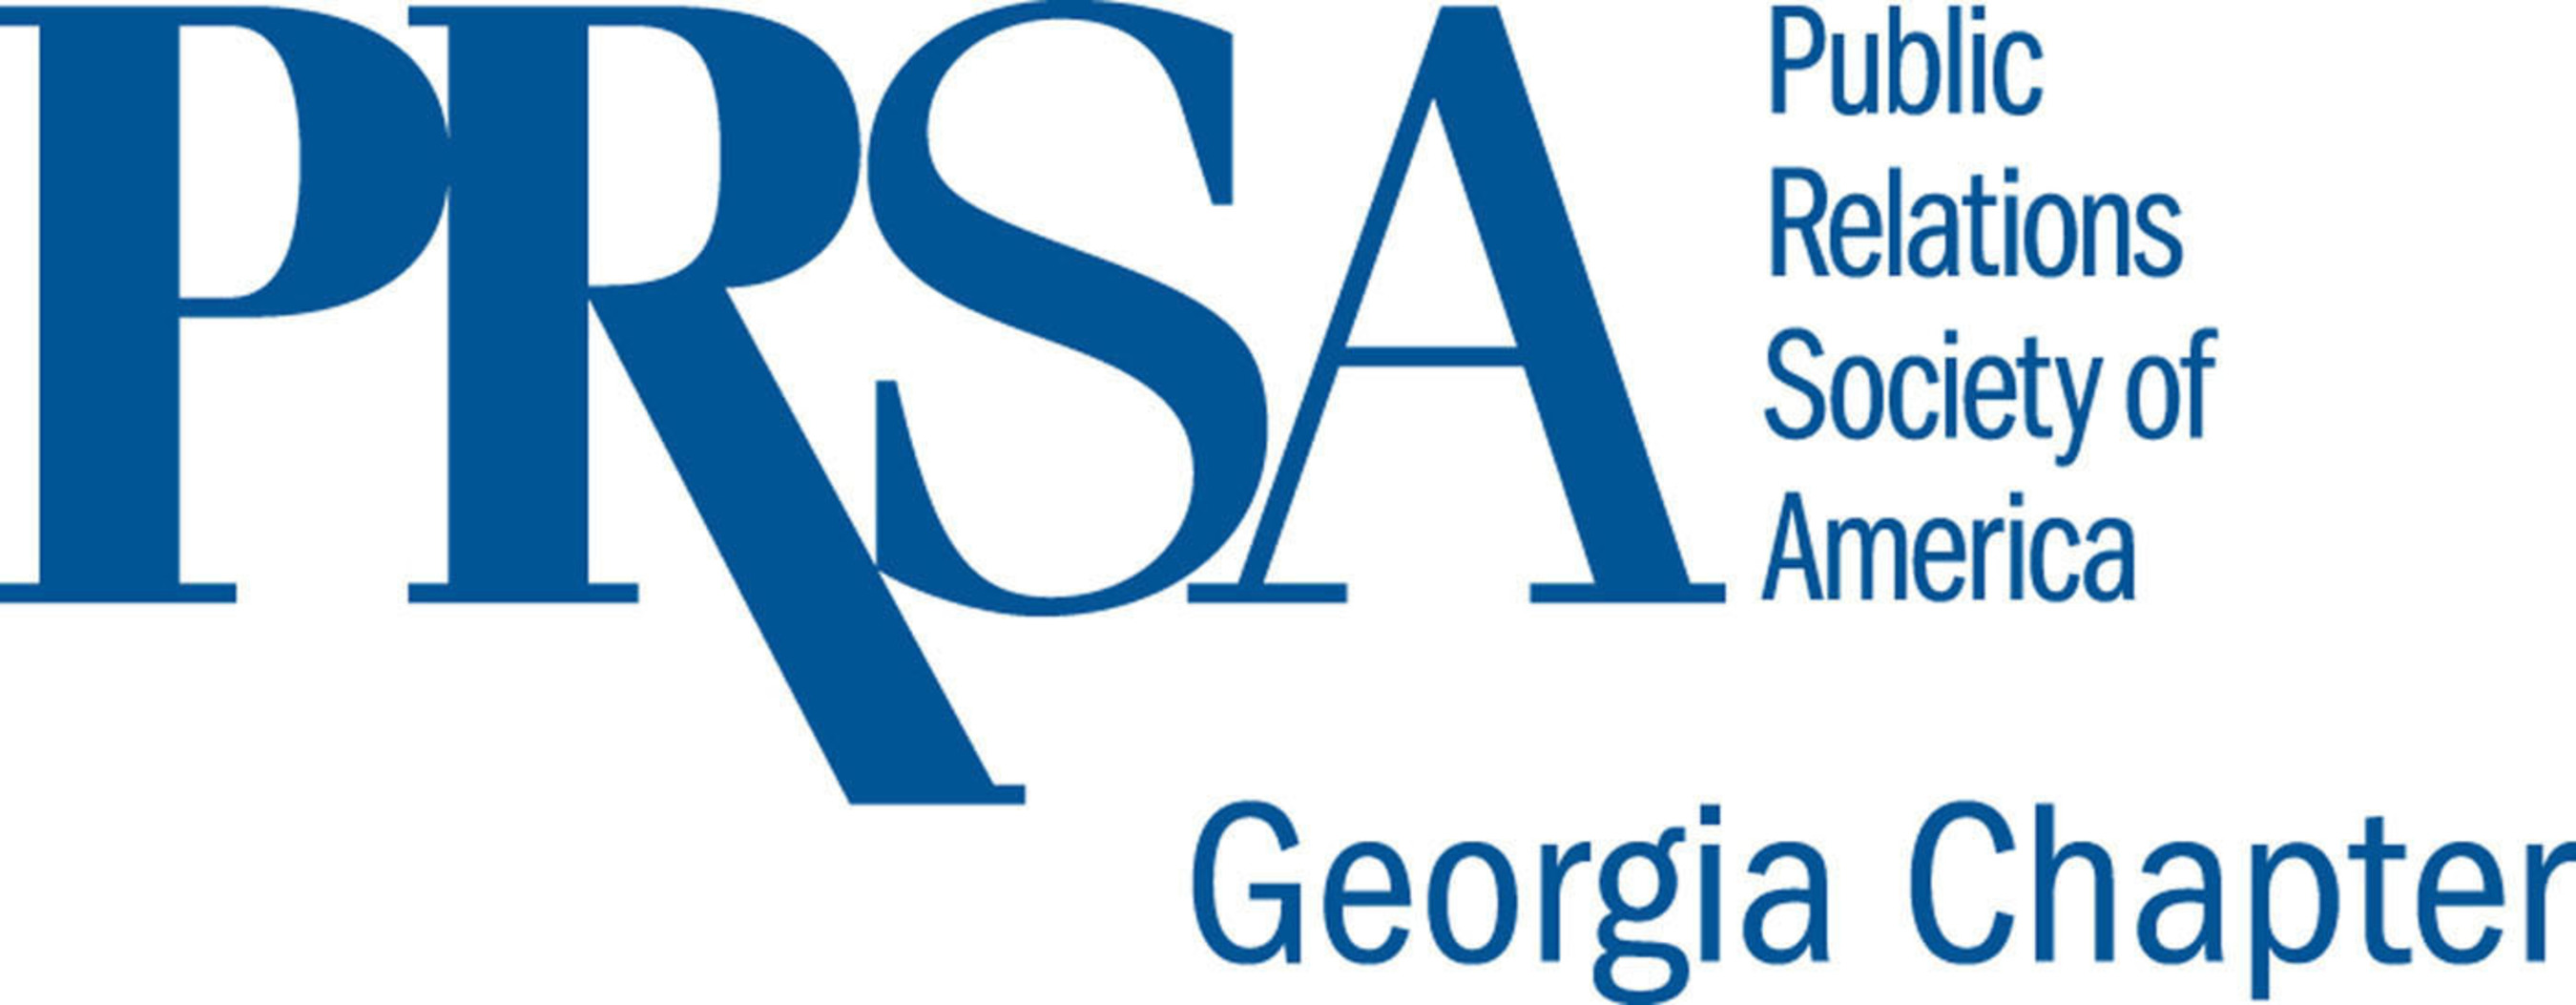 New 2012 Georgia Chapter PRSA logo